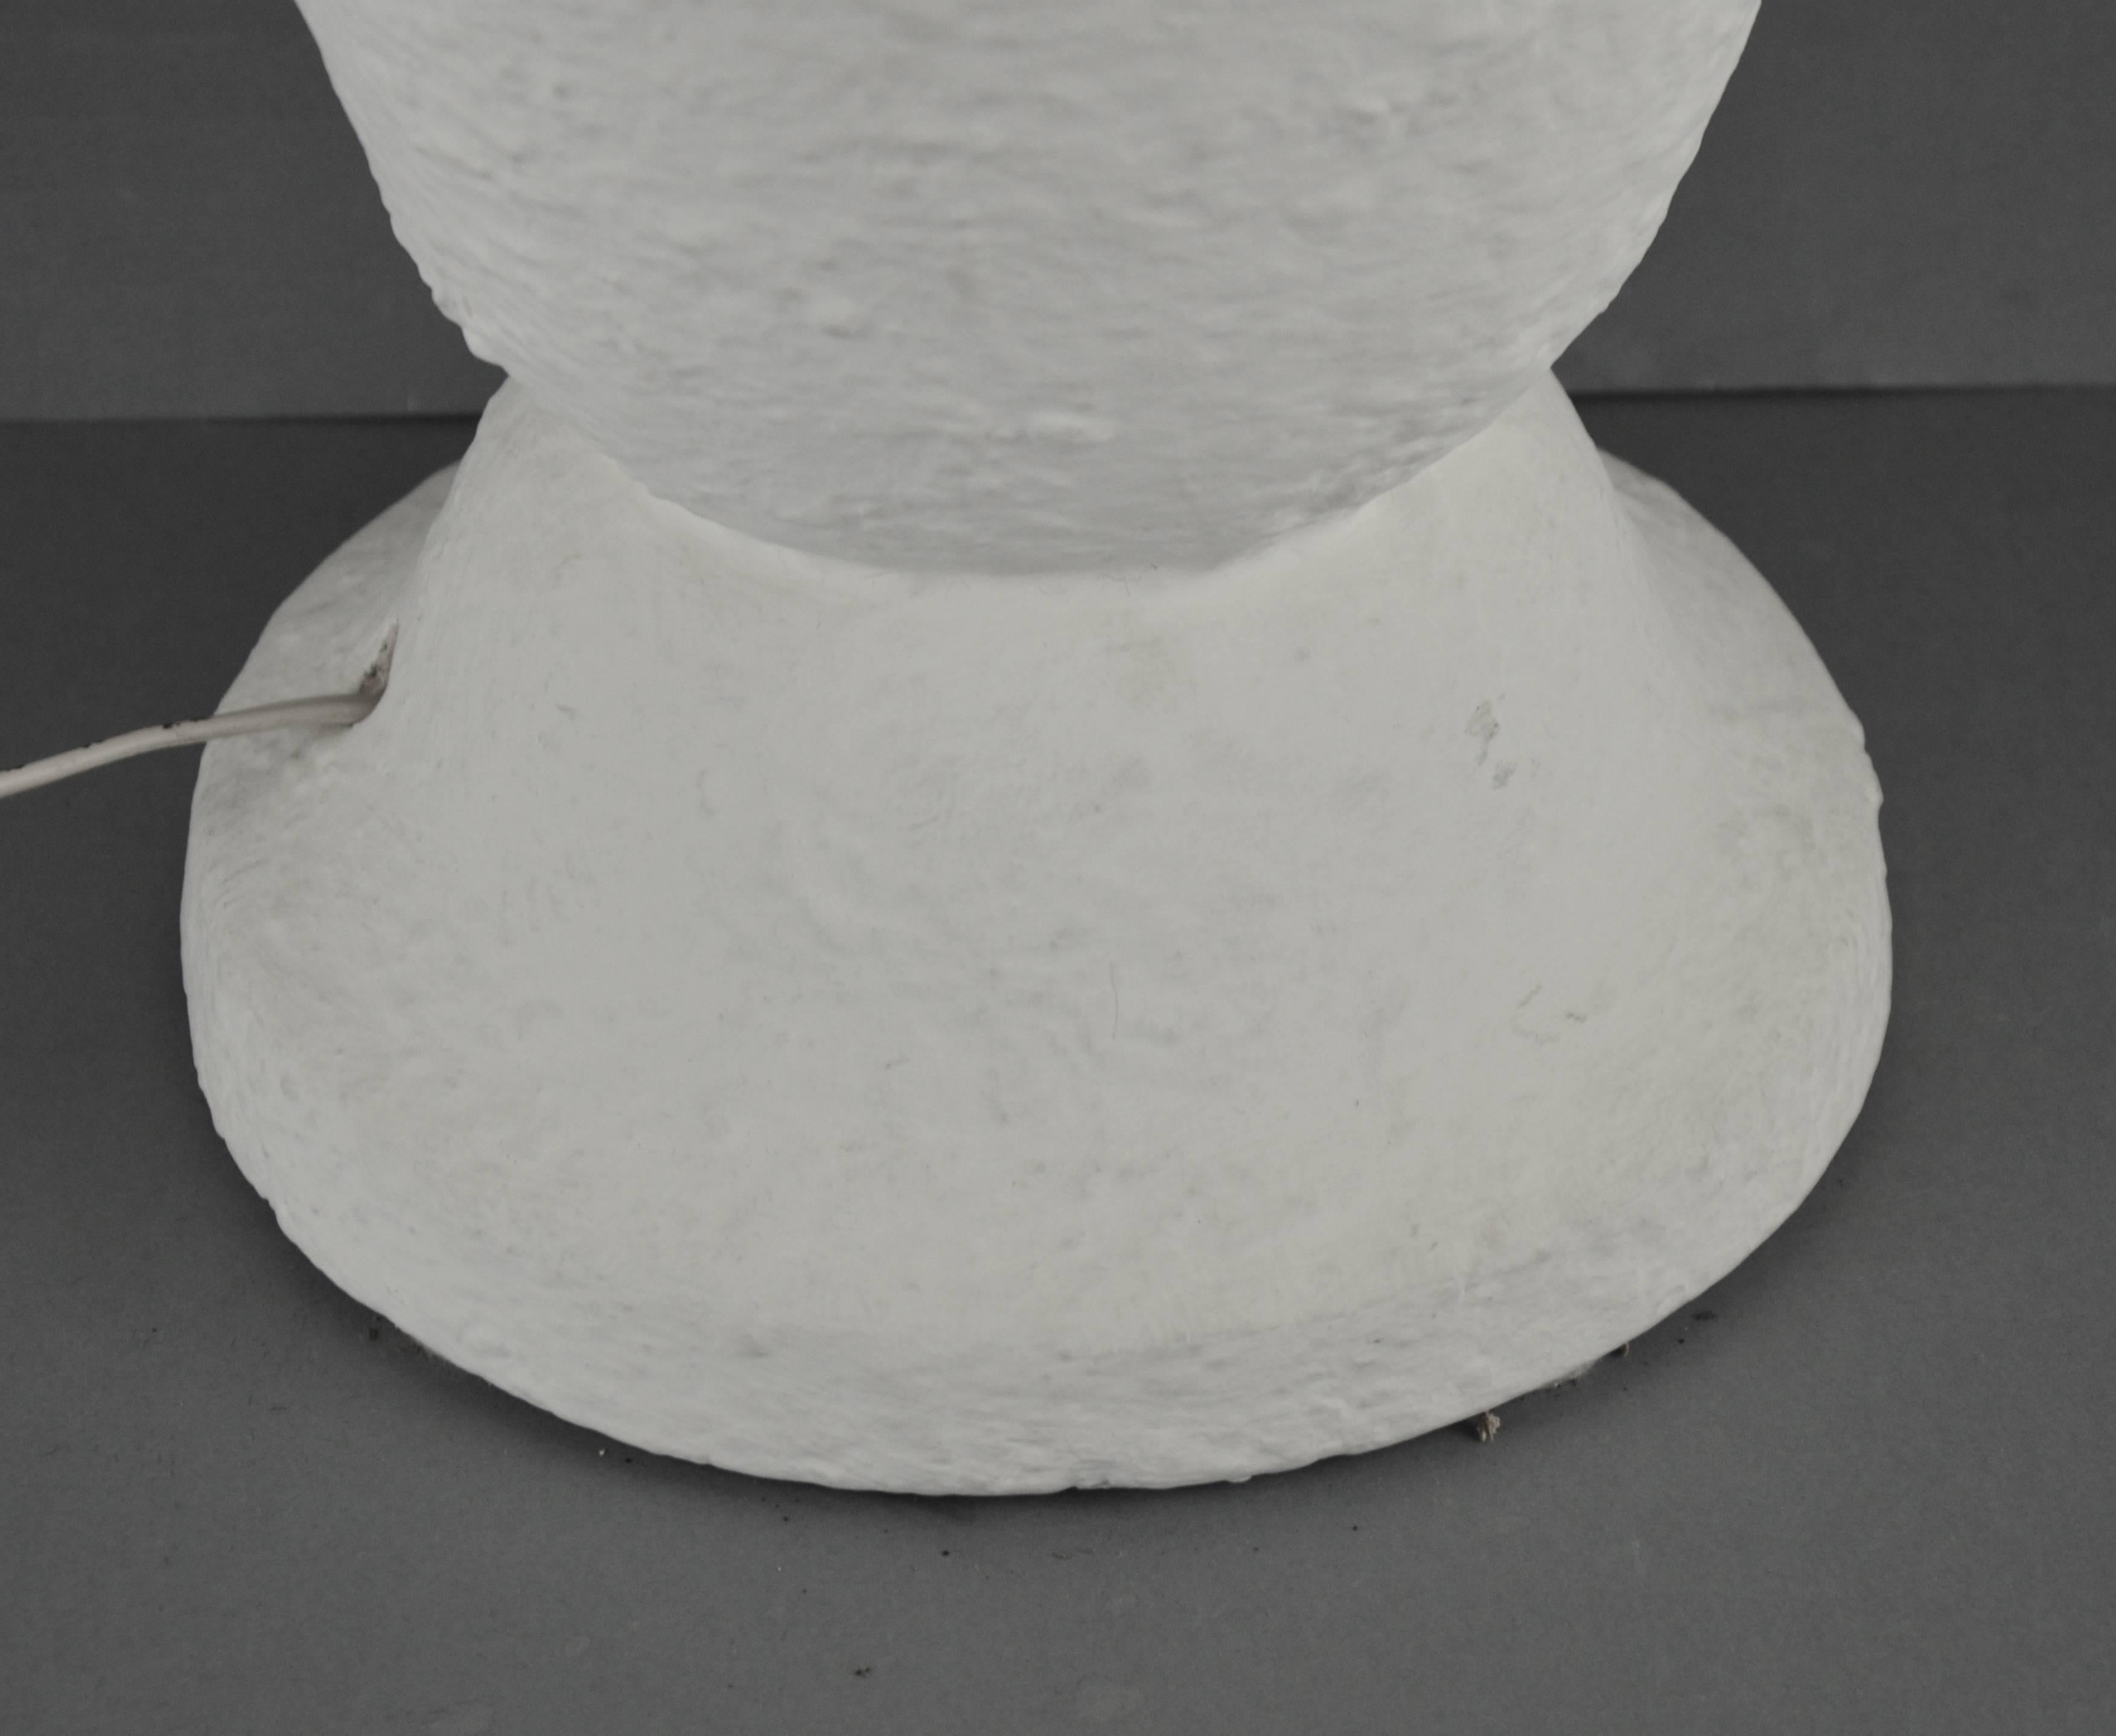 Large Art Deco white plaster cast floor lamp, Belgium, 1940s.
Dimensions: height 52 cm, Ø 36 cm.